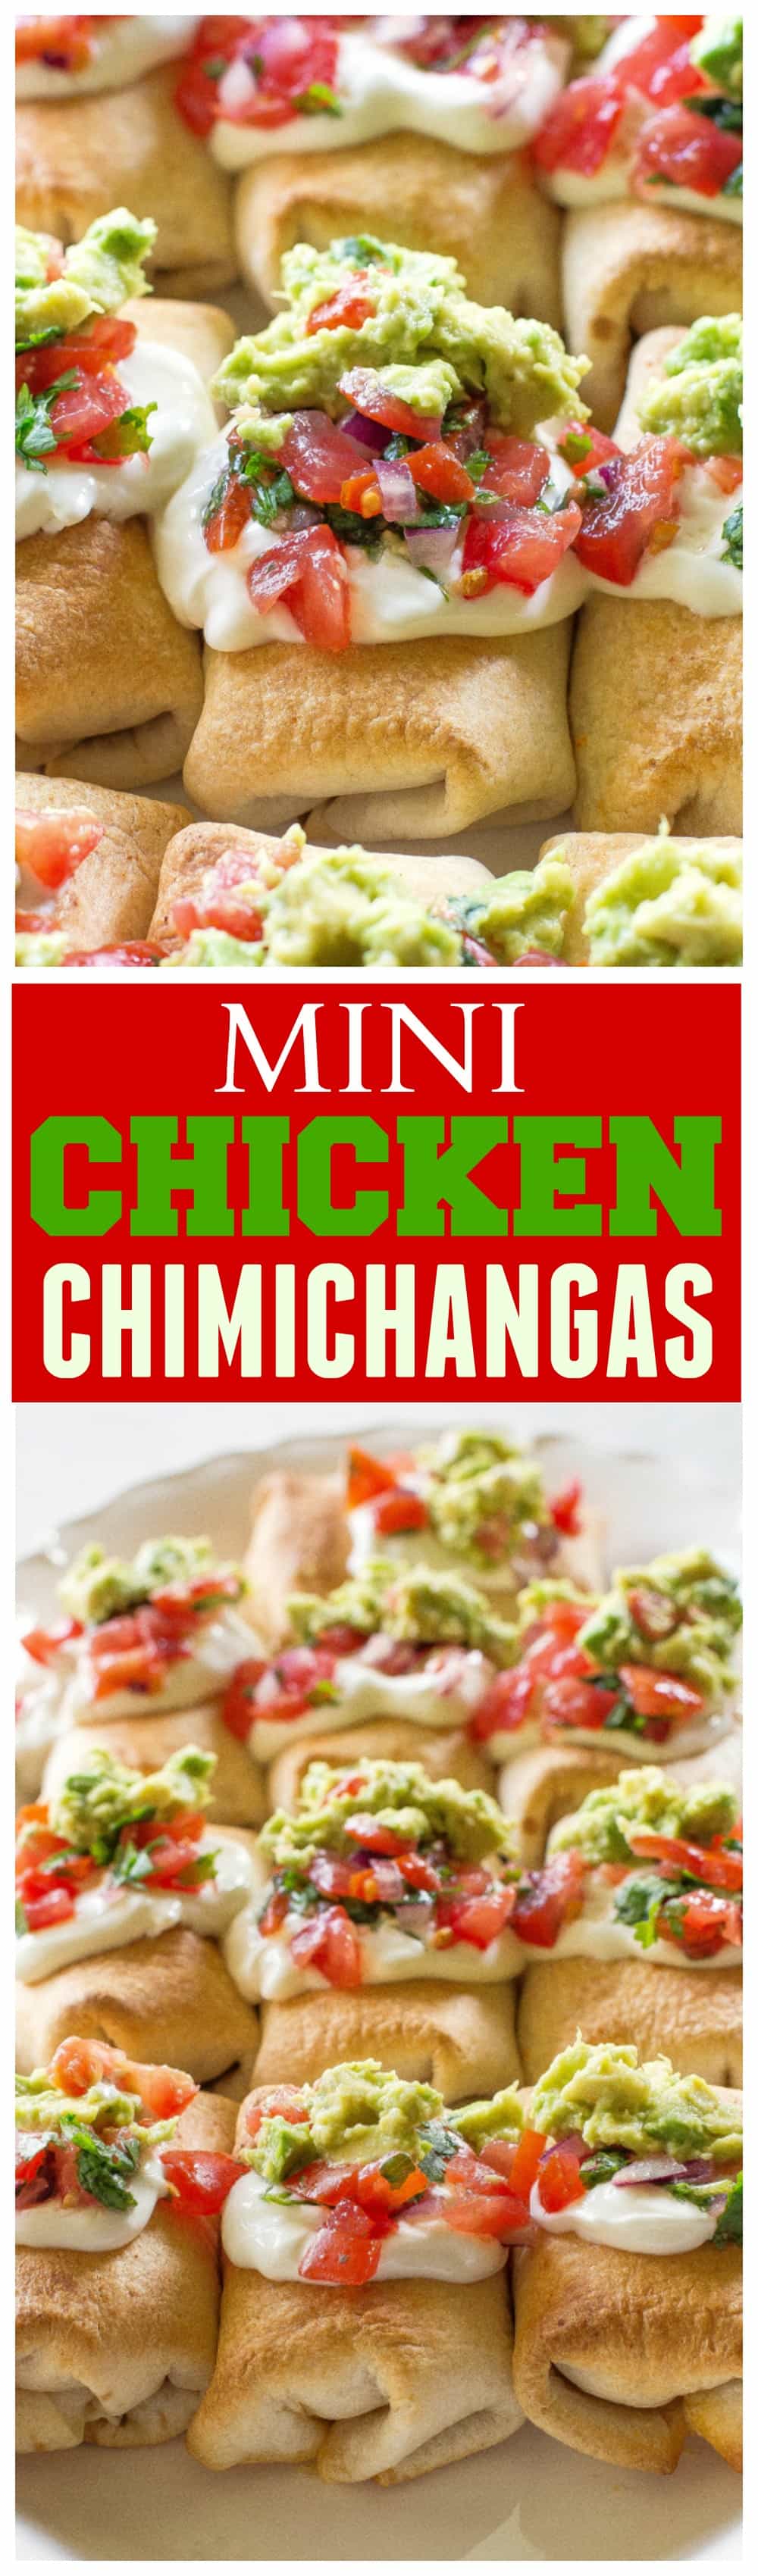 Skinny Chimichangas - Recipe Girl